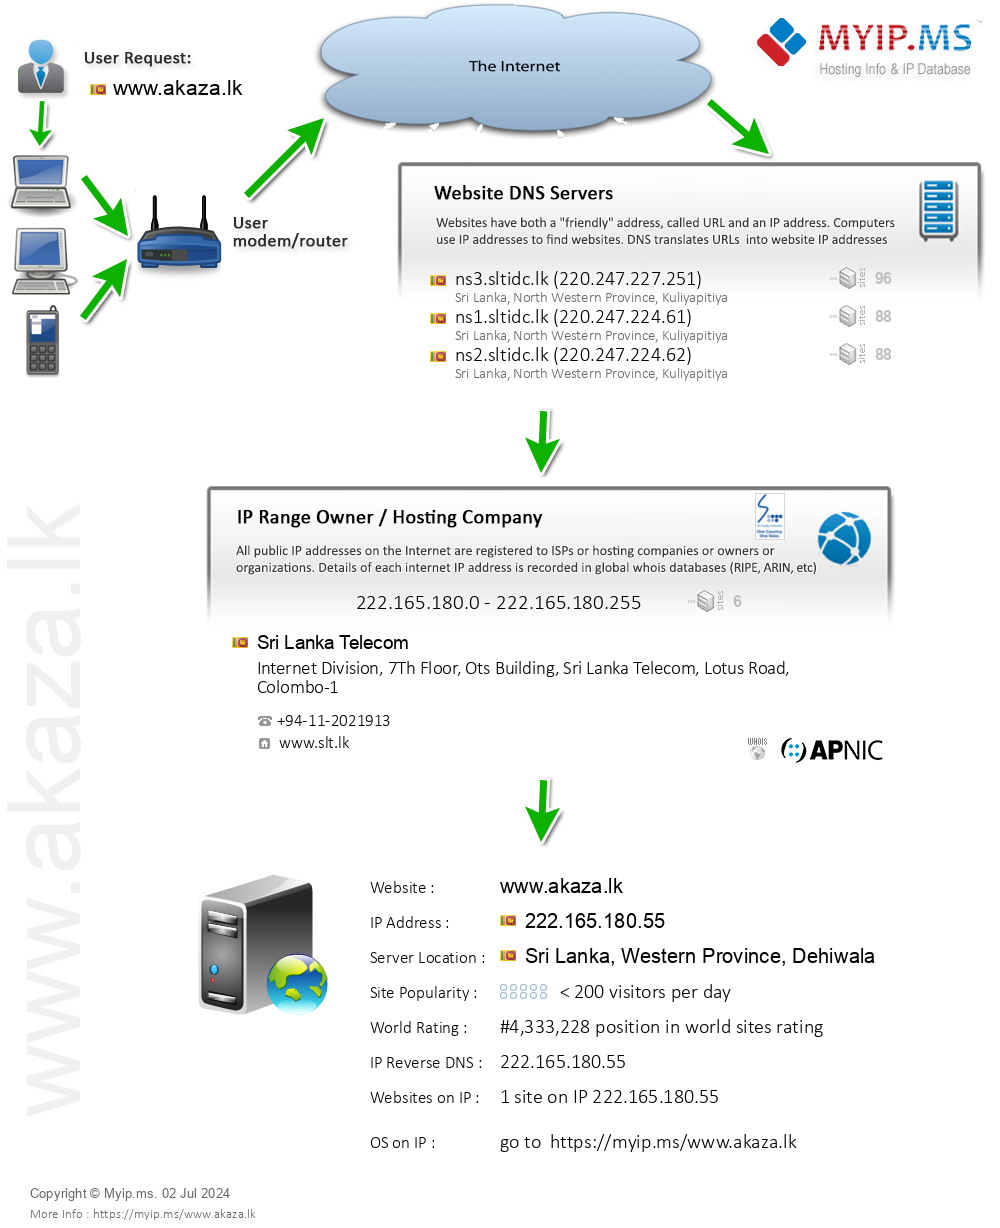 Akaza.lk - Website Hosting Visual IP Diagram